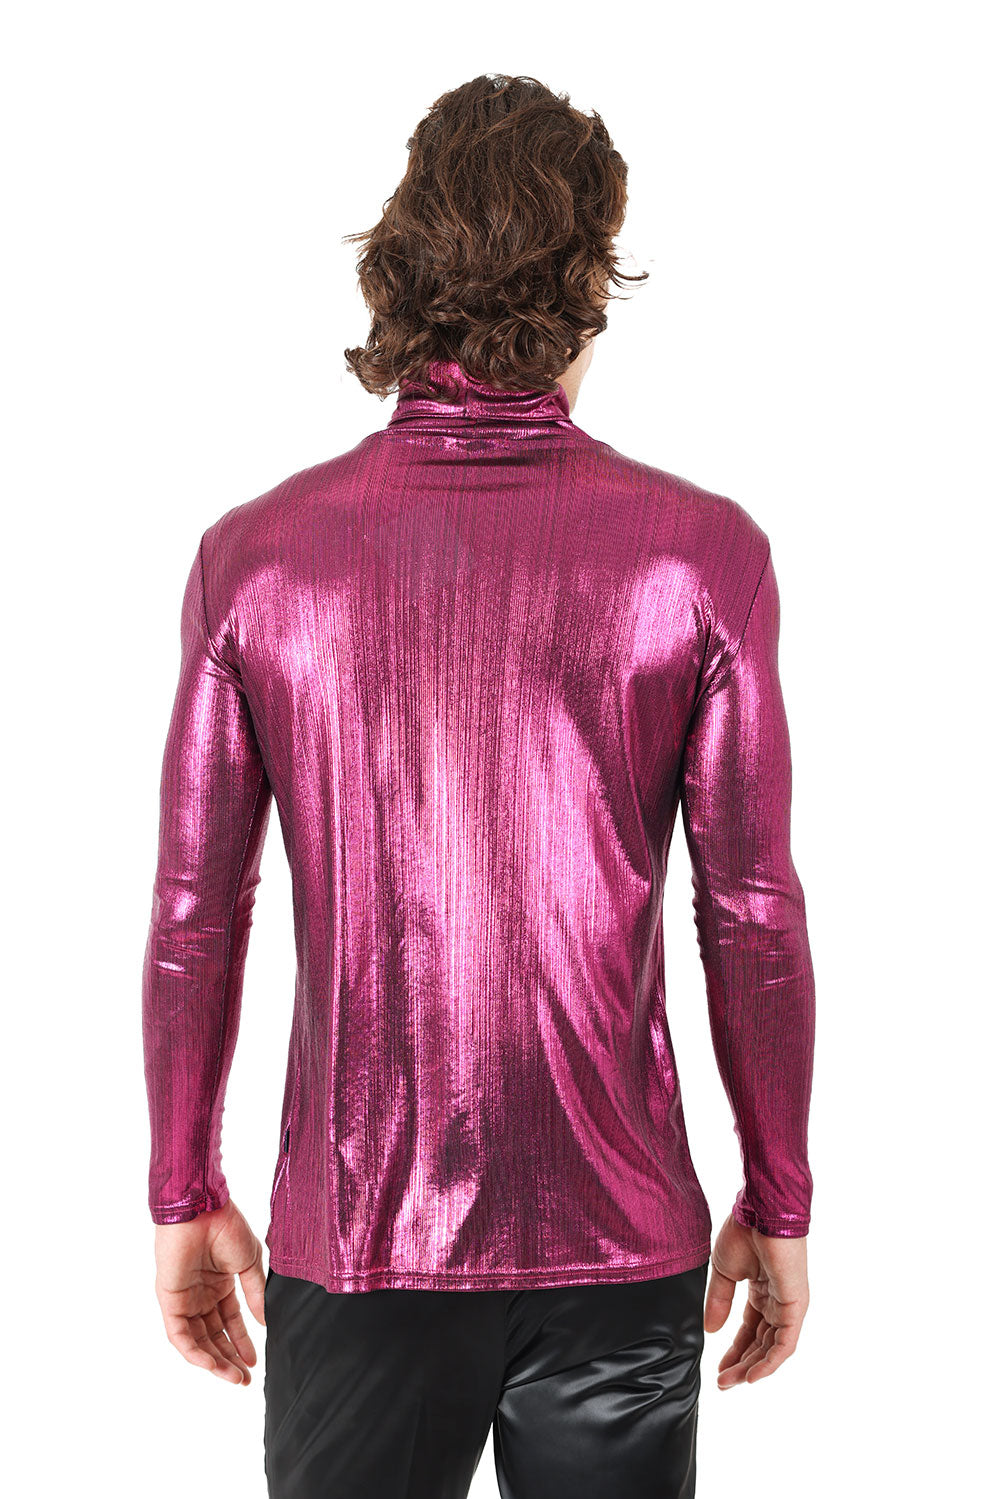 Barabas Men's Metallic Shiny Long Sleeve Turtleneck Sweater 2KT1000 Magenta